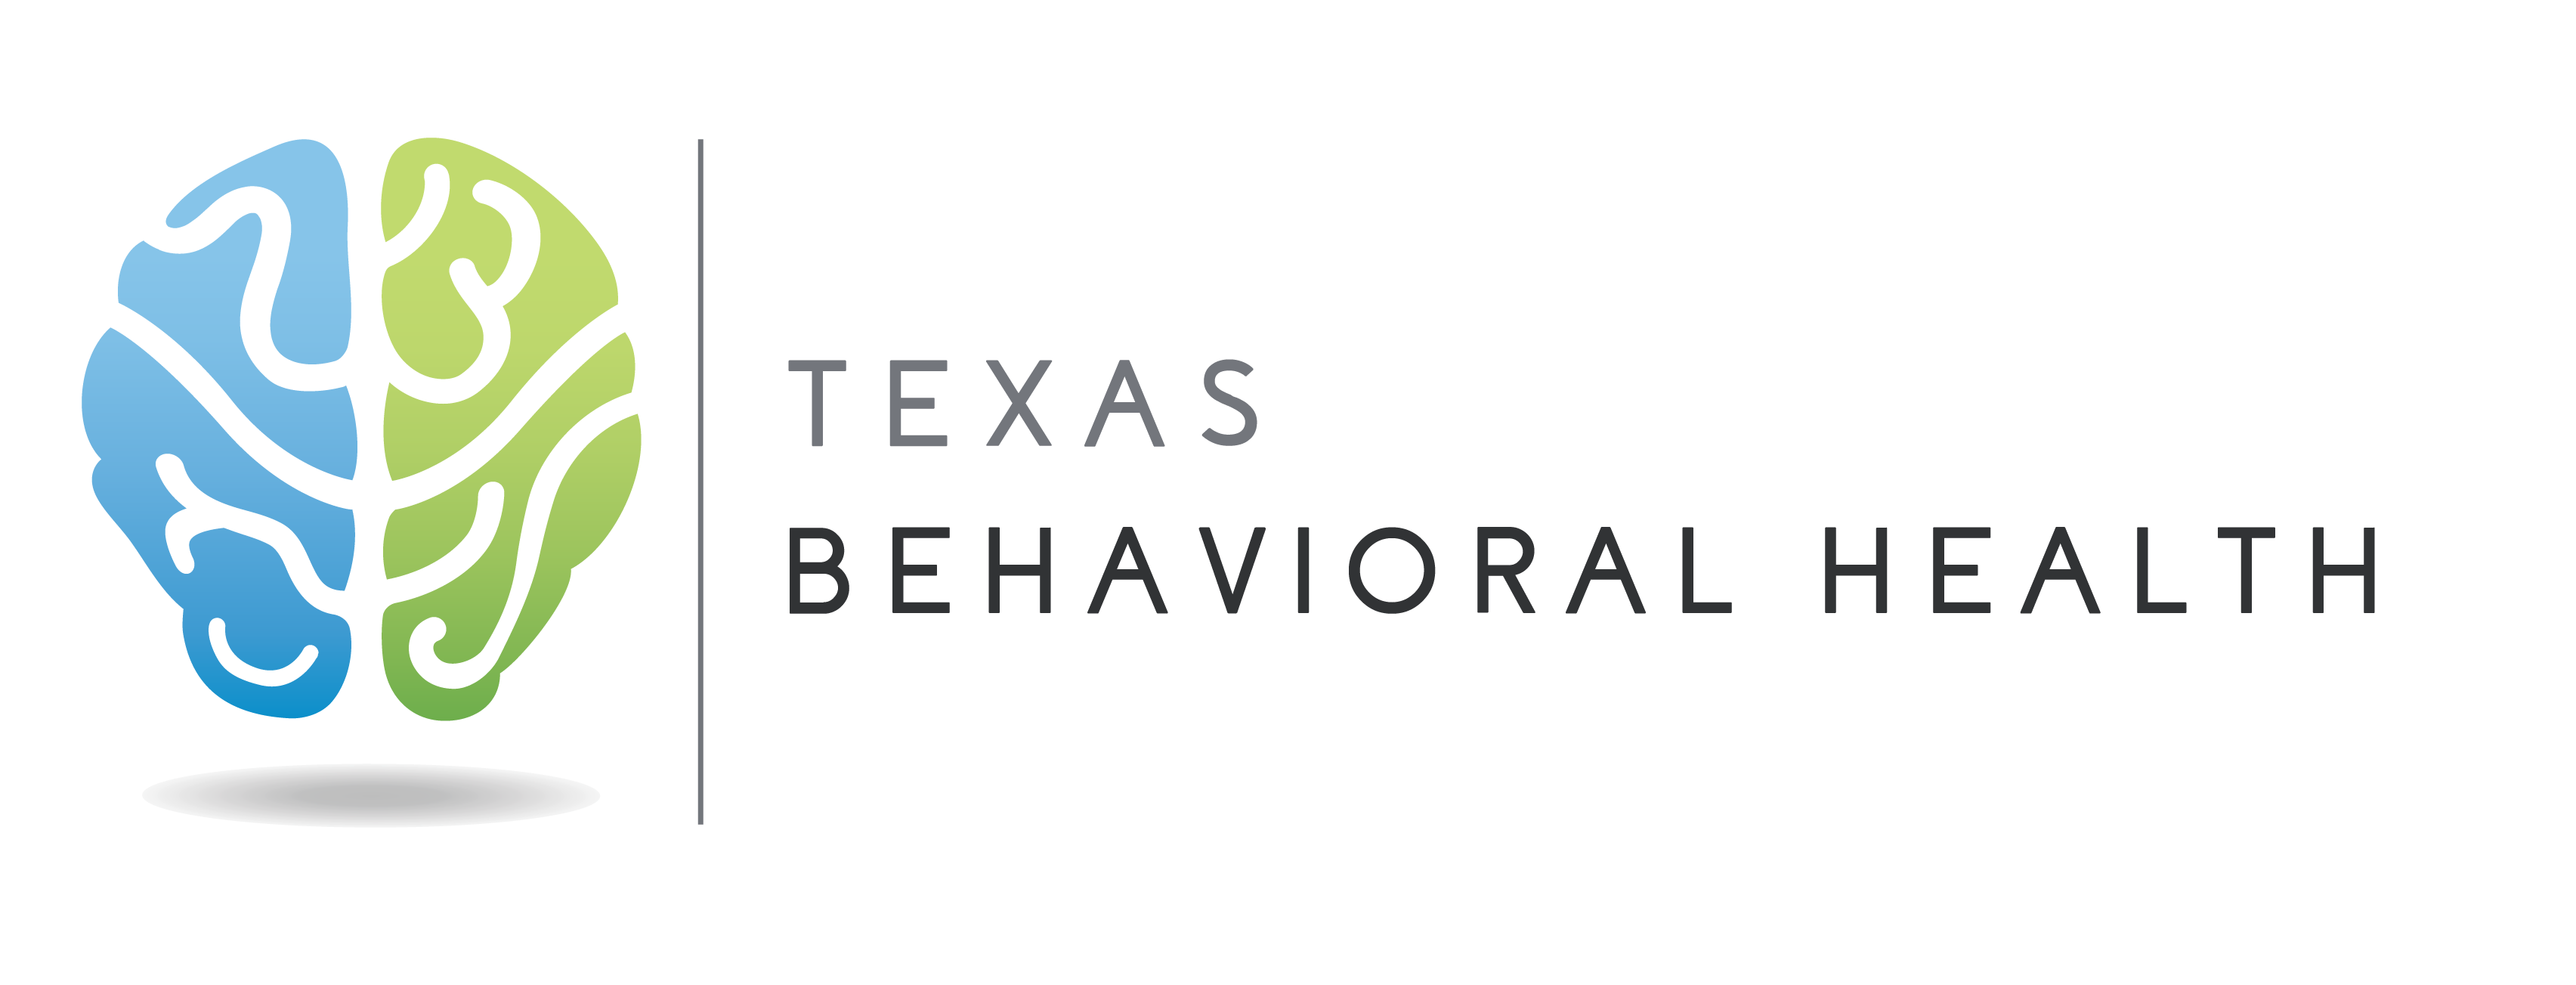 Texas Behavioral Health logo